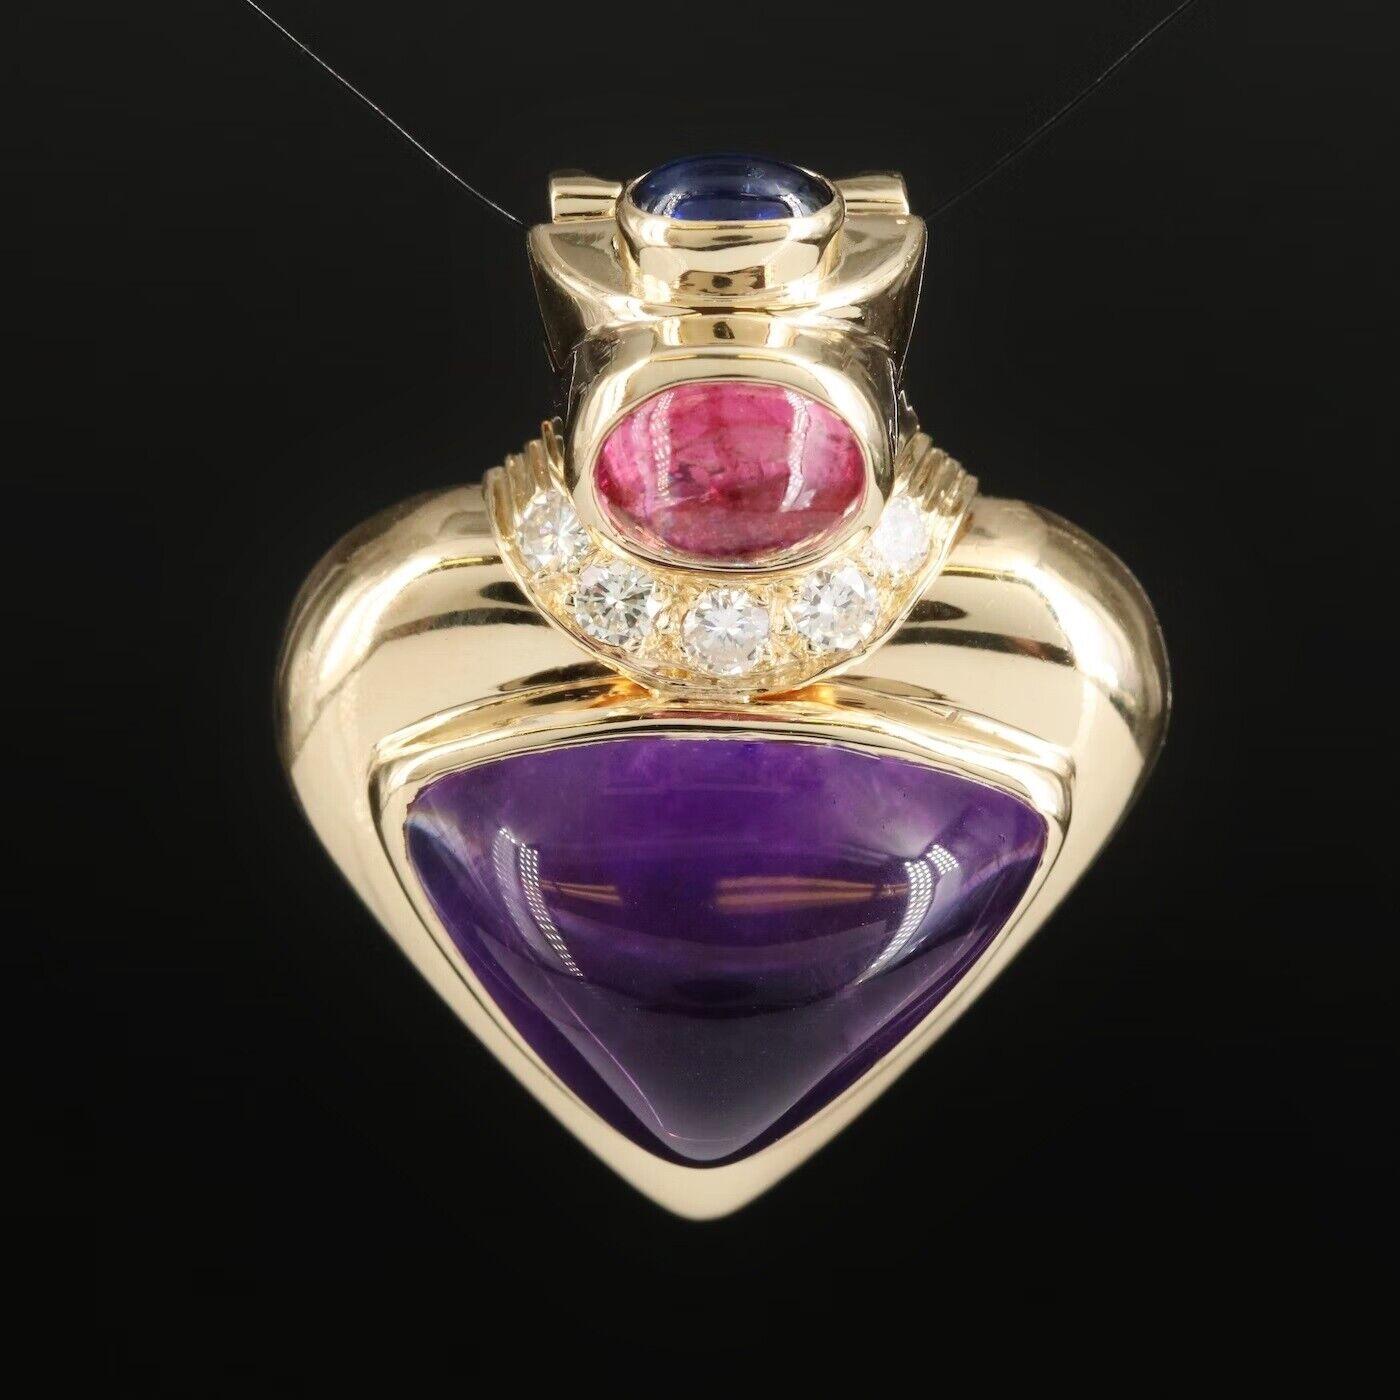 Round Cut $12500 / Lagos Heart Pendant Brooch /Massive Diamond & Gemstone / 14K